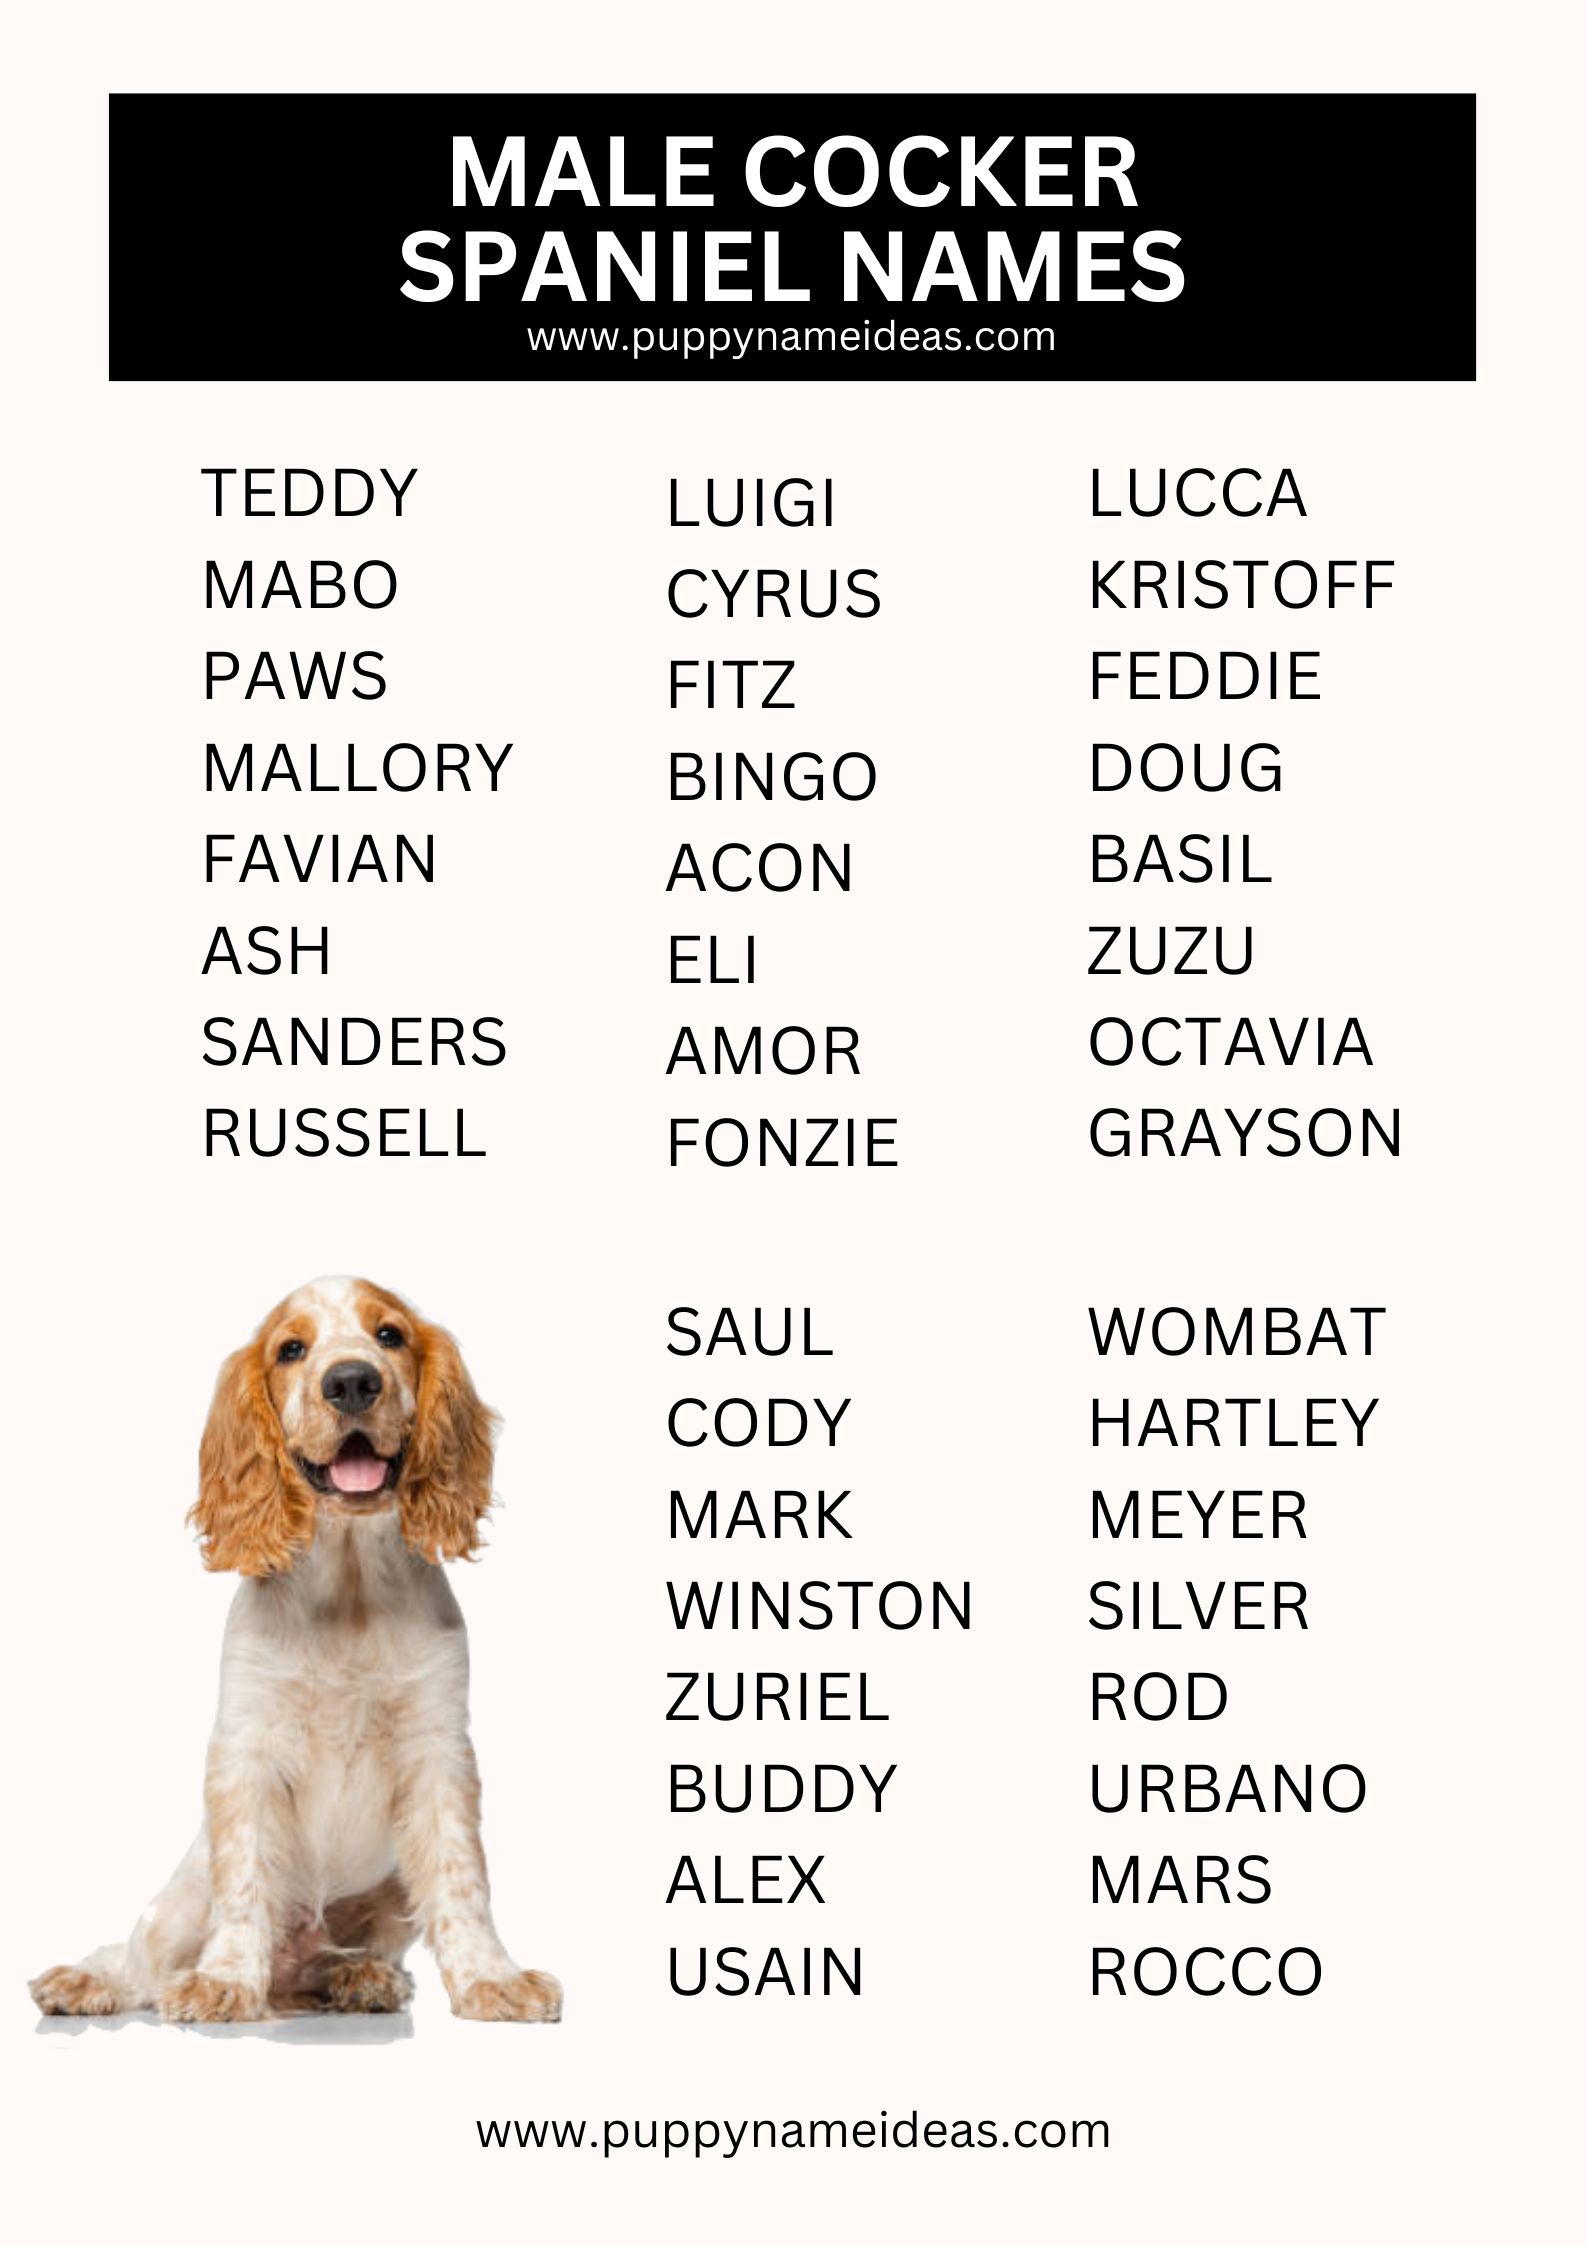 List Of Male Cocker Spaniel Names